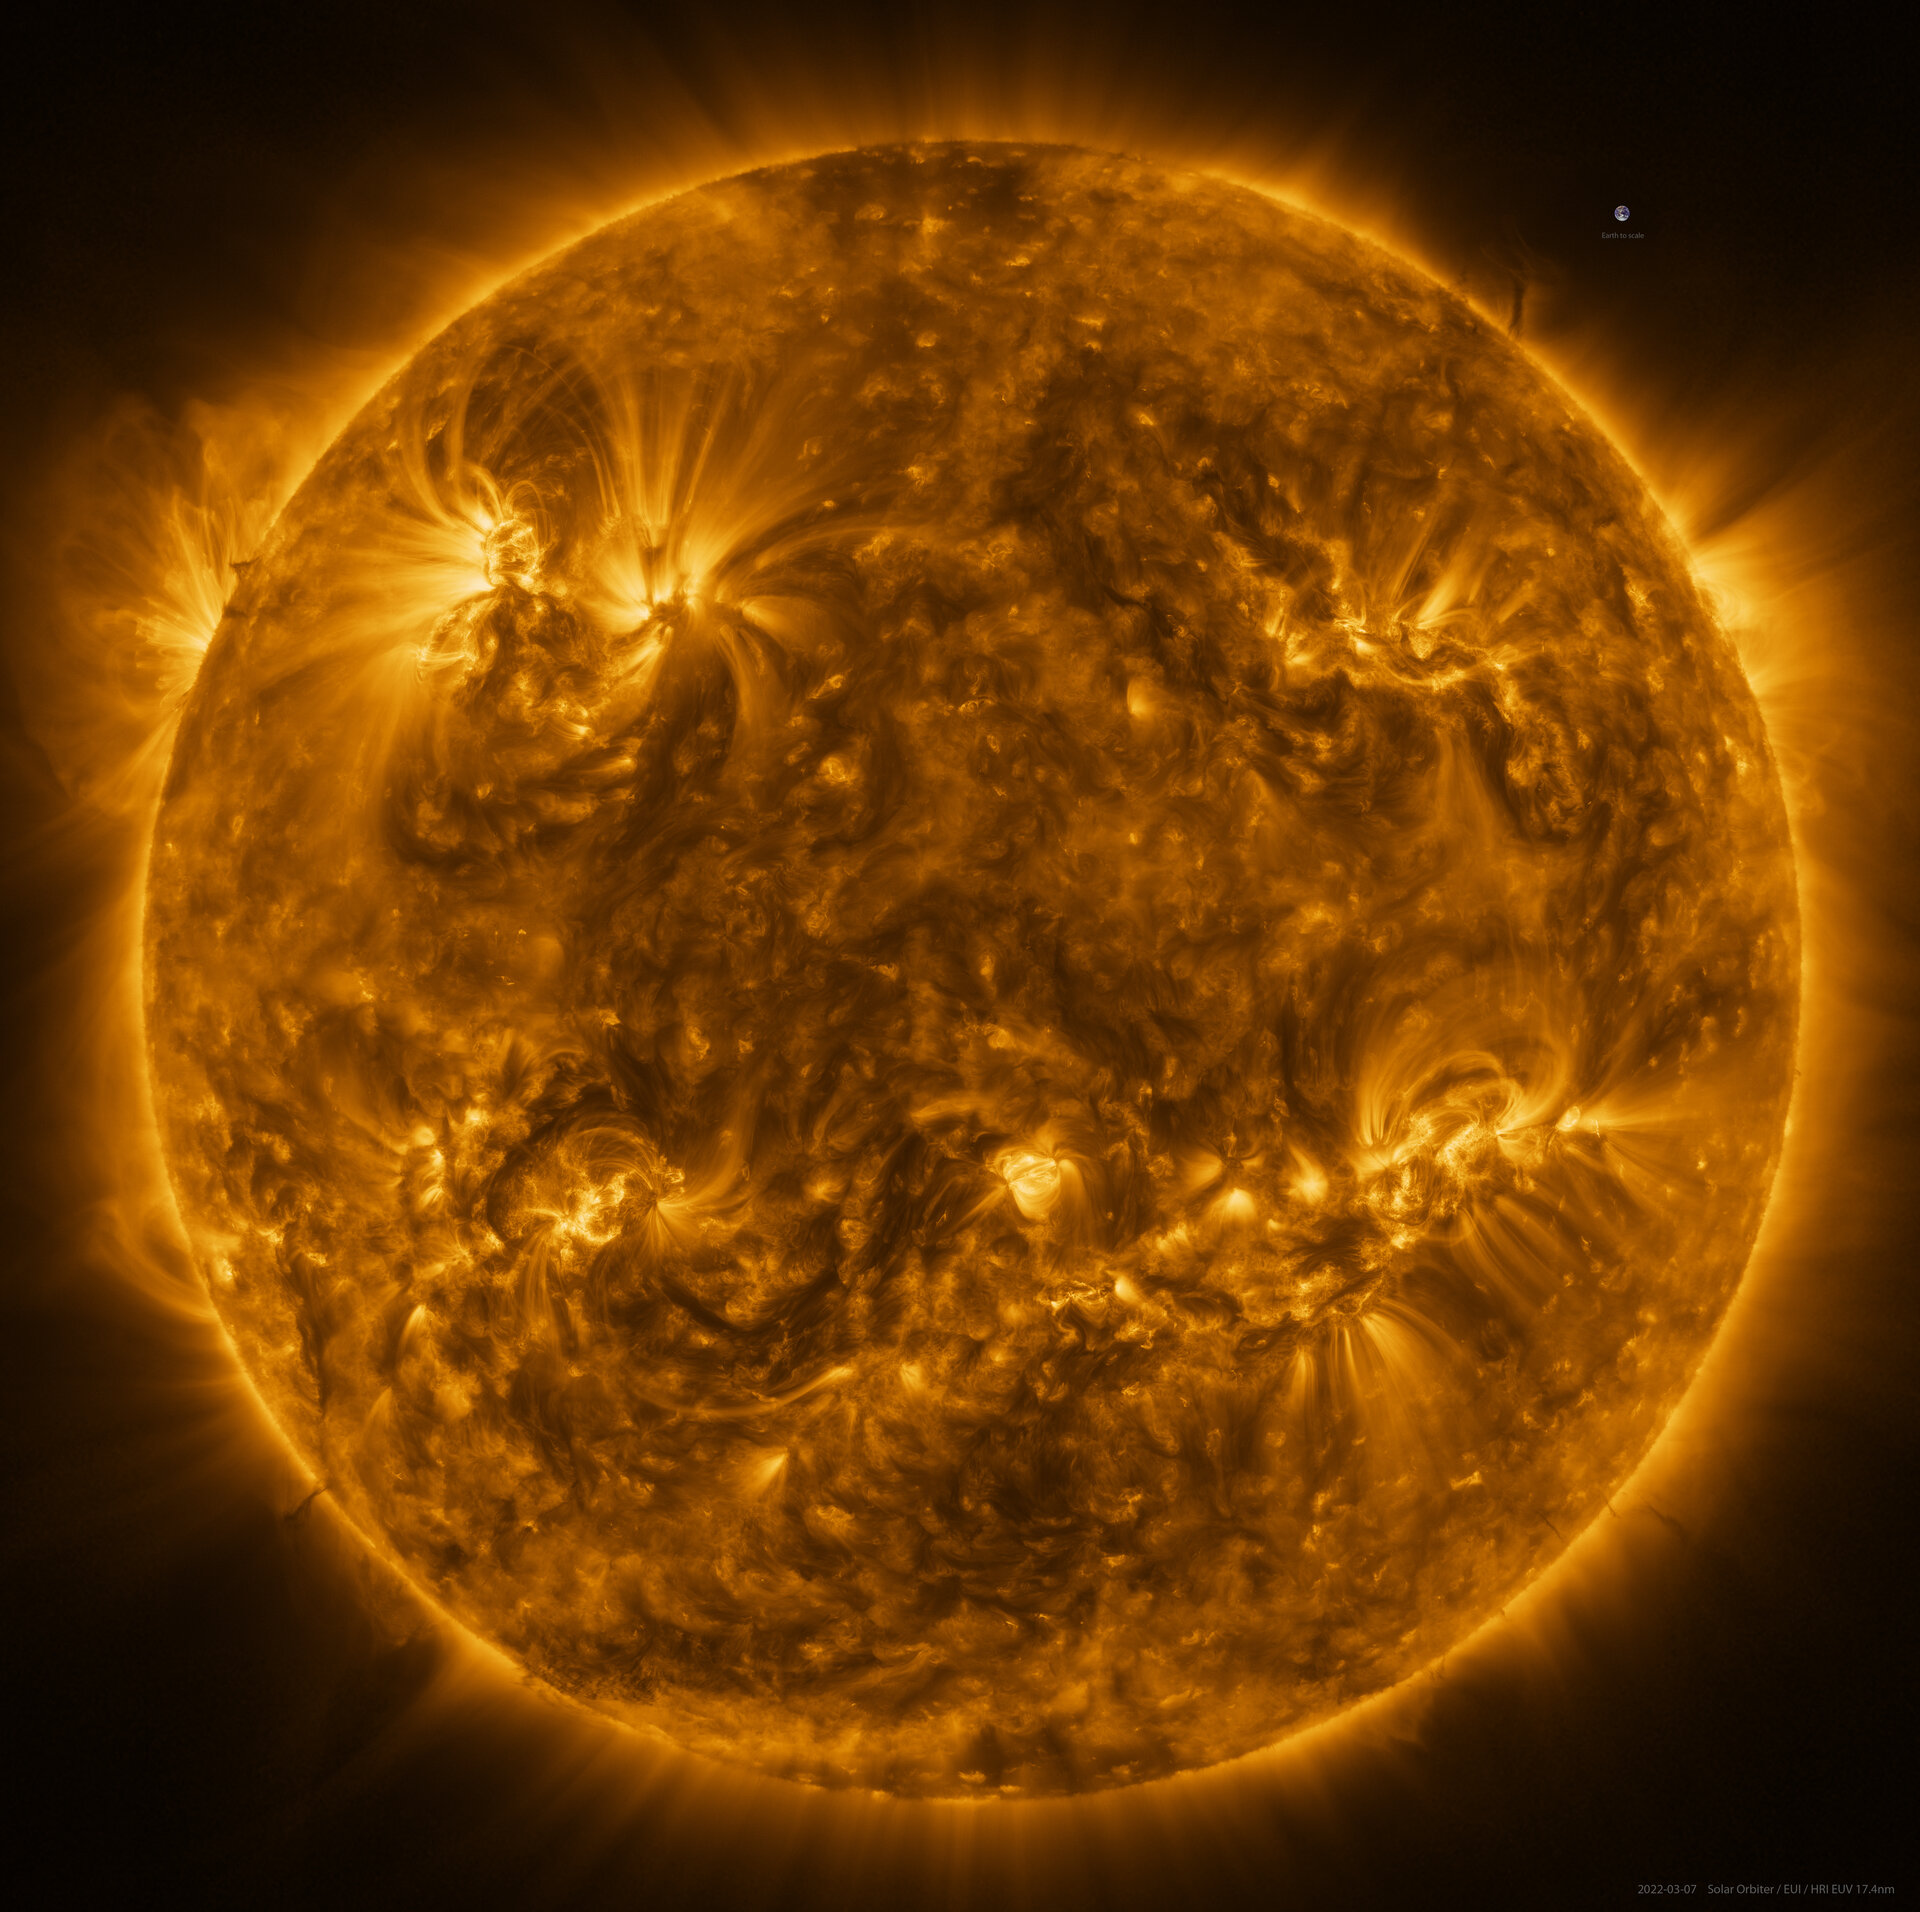 ESA - The Sun in high resolution